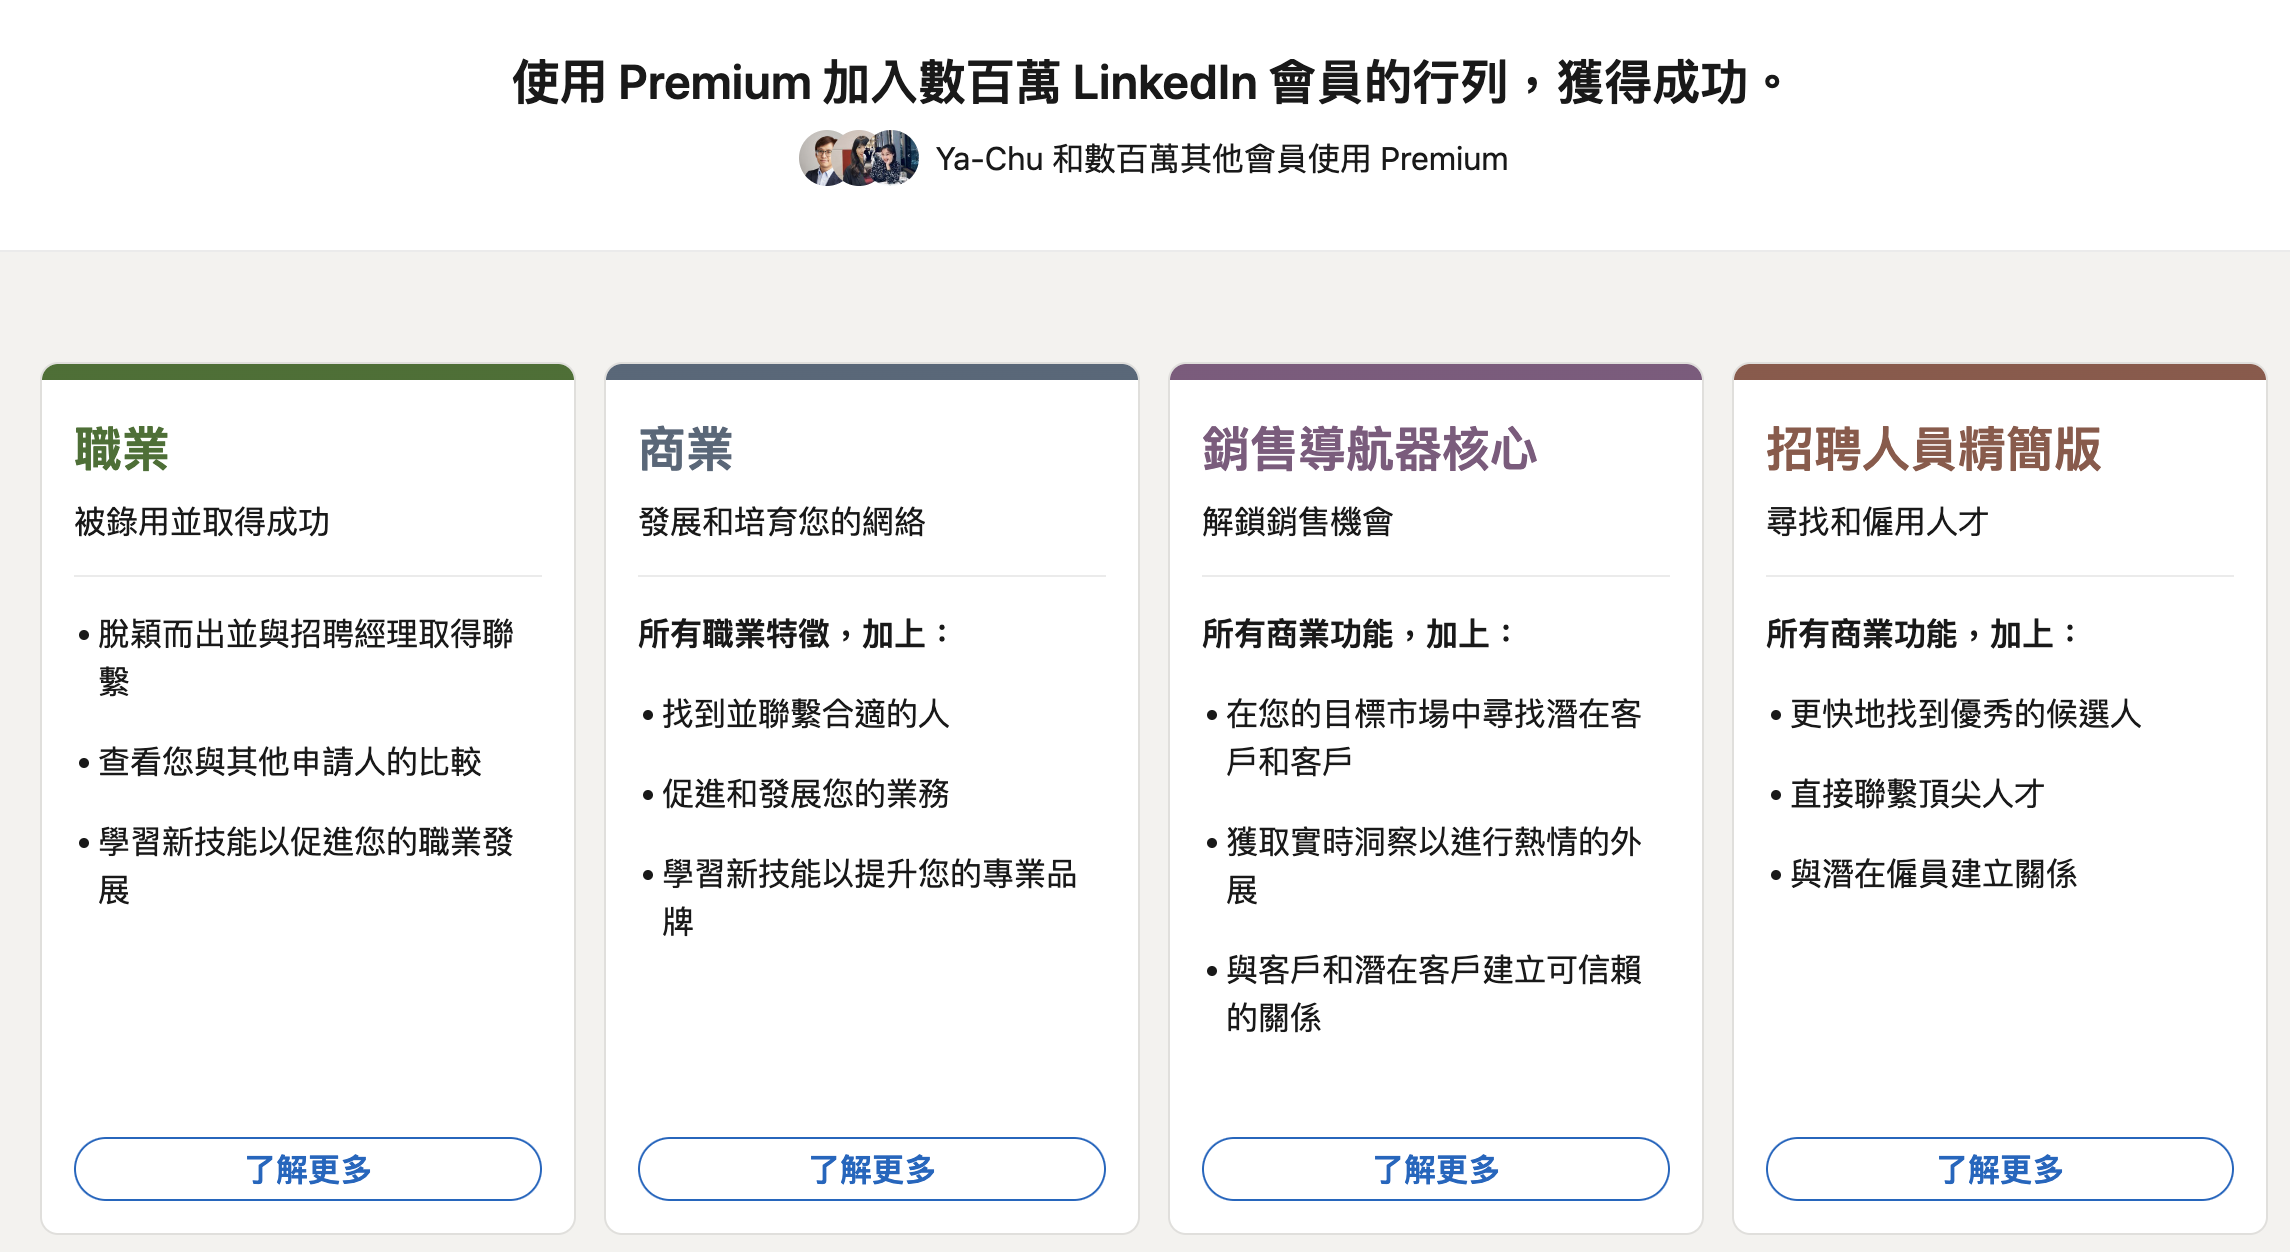 LinkedIn Premium方案